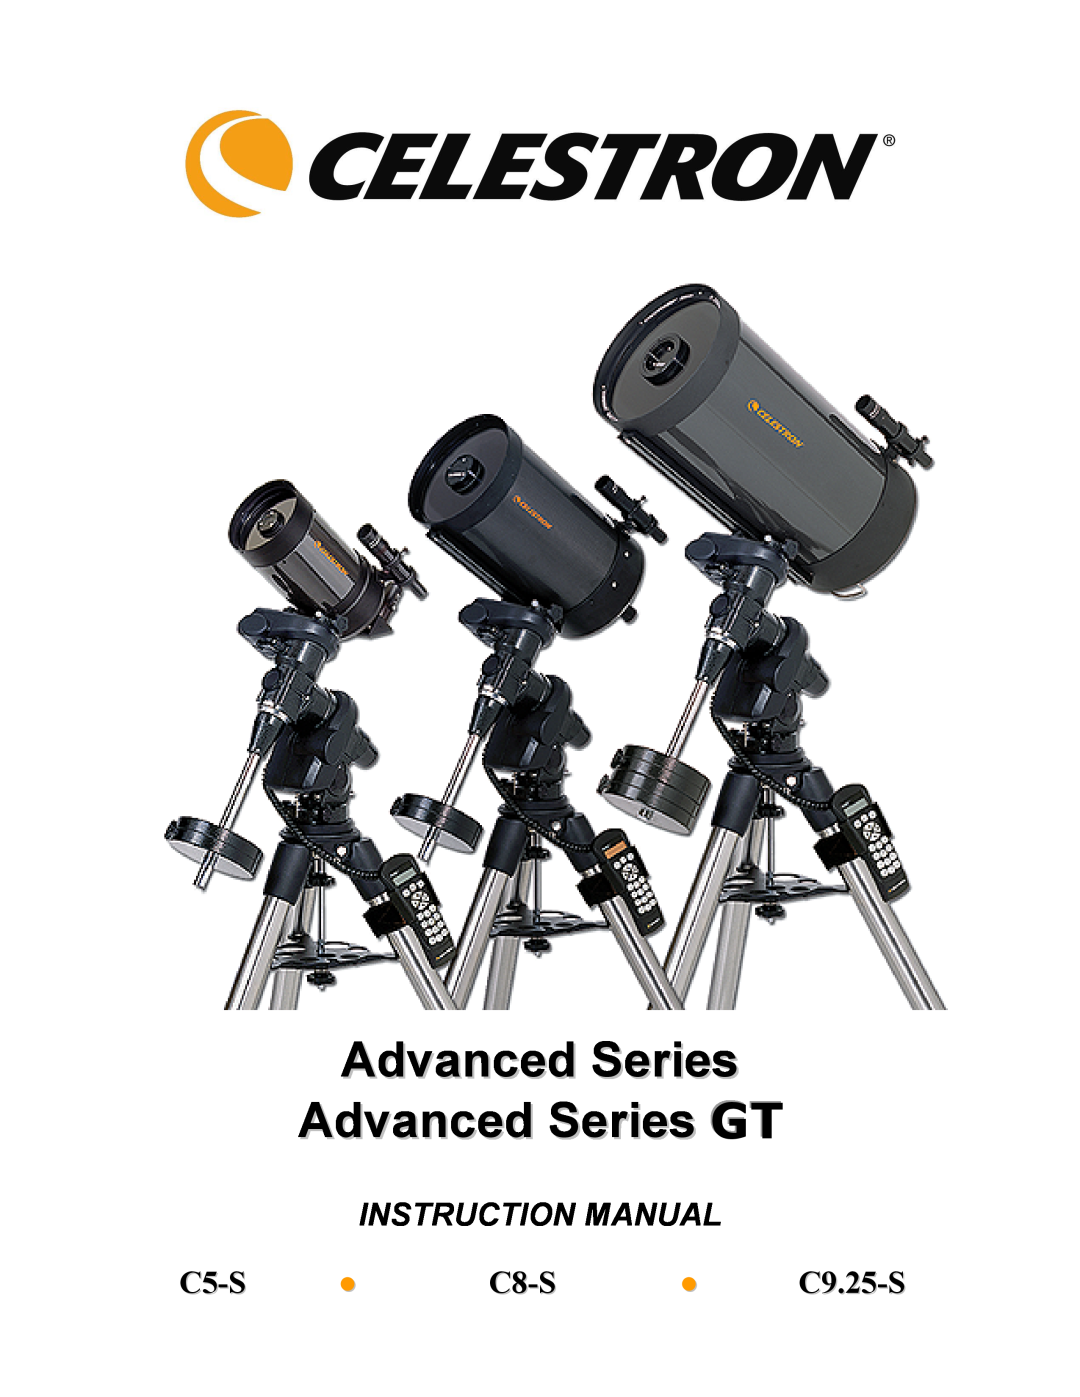 Celestron C9-S instruction manual C5-S C8-S C9.25-S, Advanced Series Advanced Series GT 